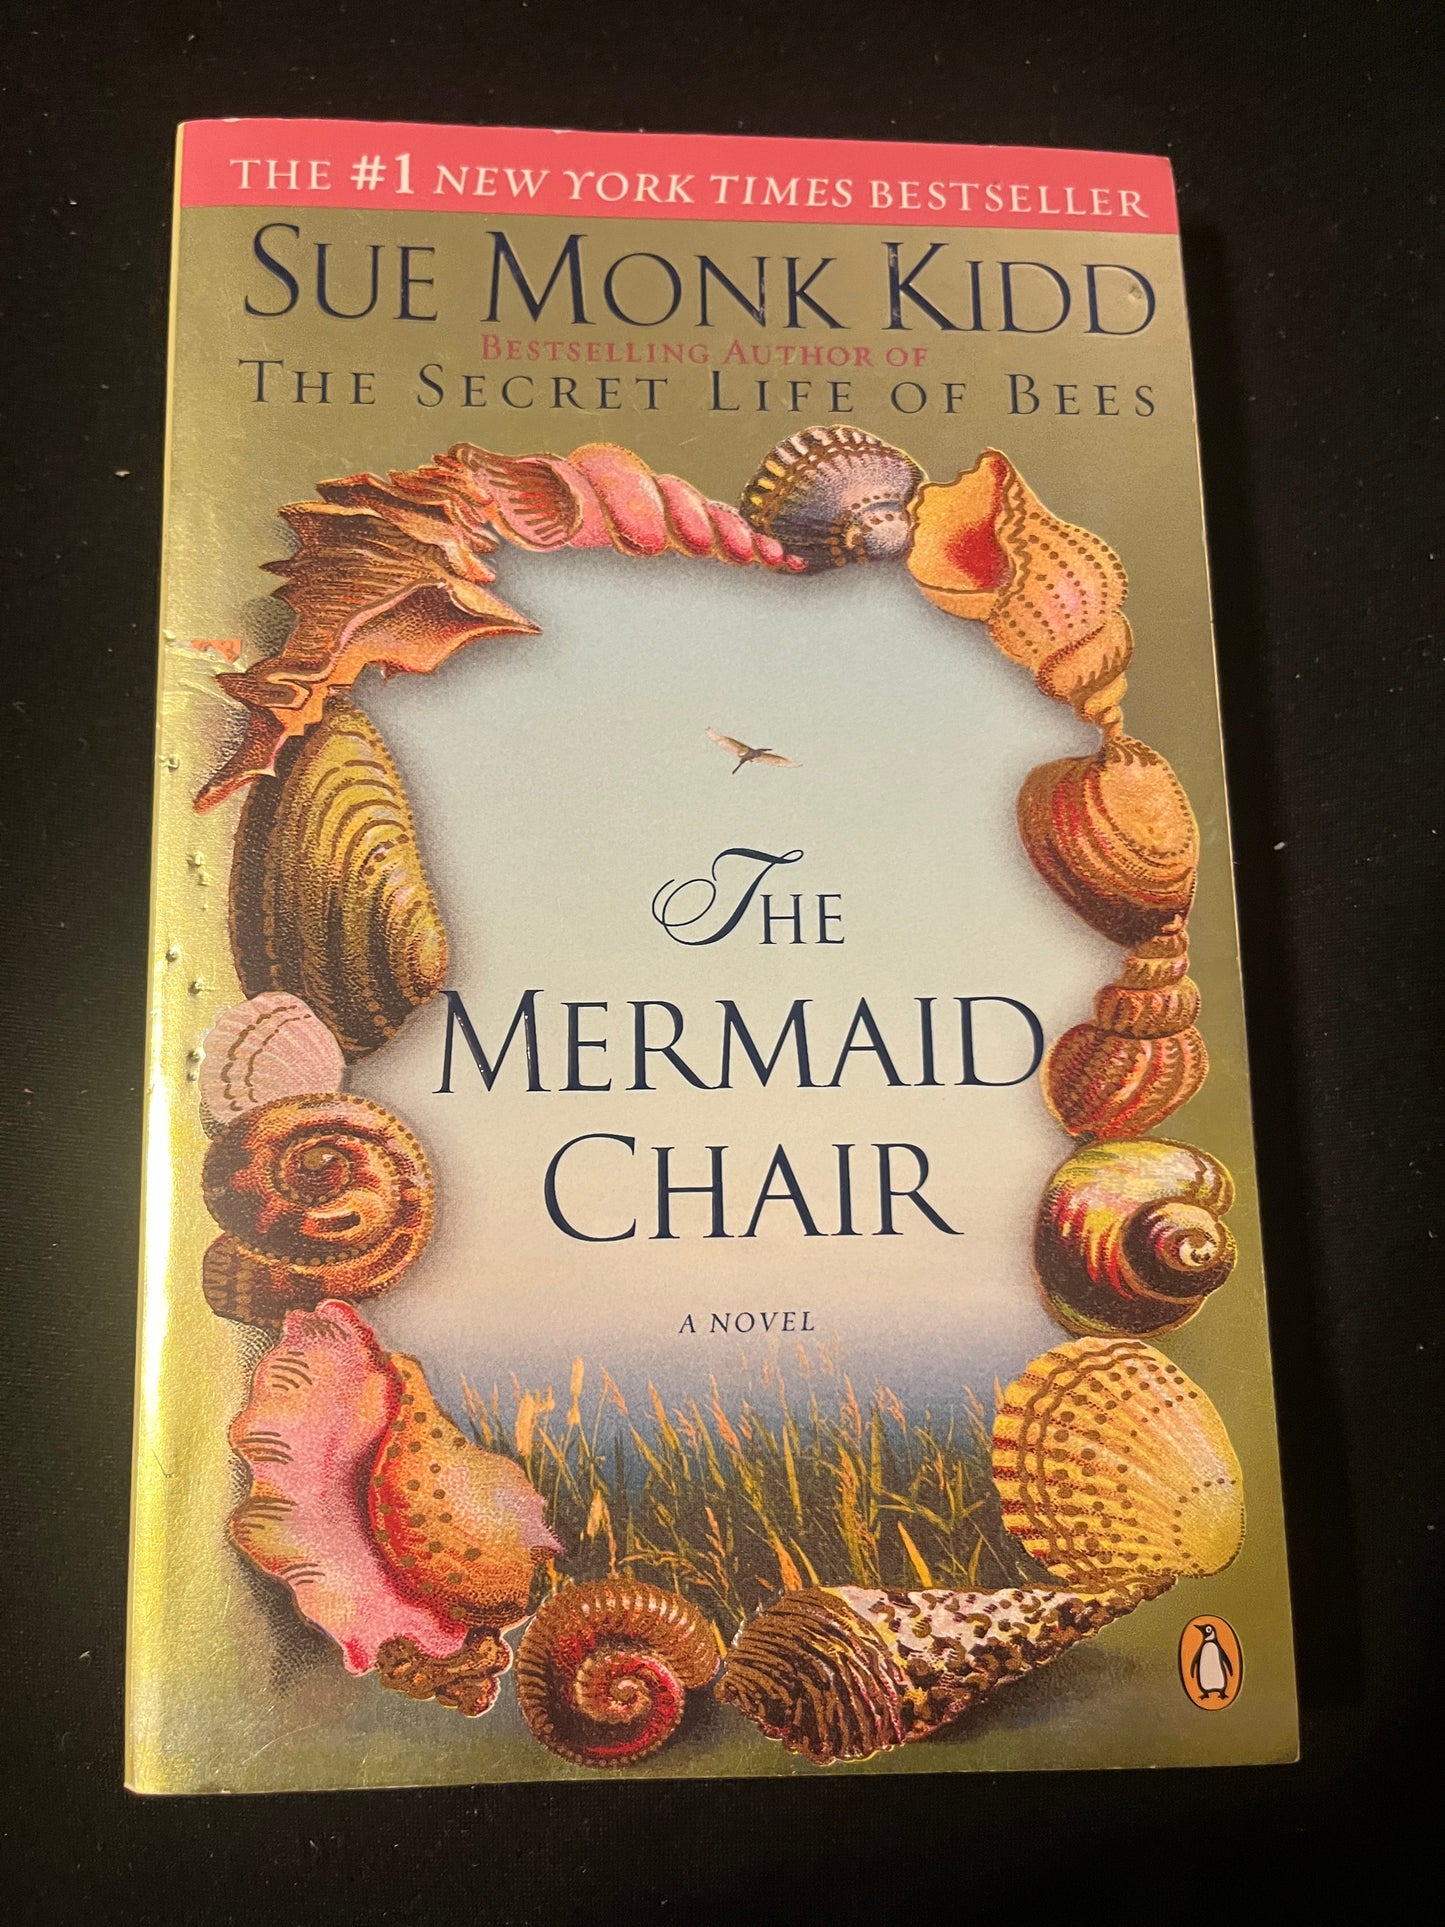 THE MERMAID CHAIR by Sue Monk Kidd